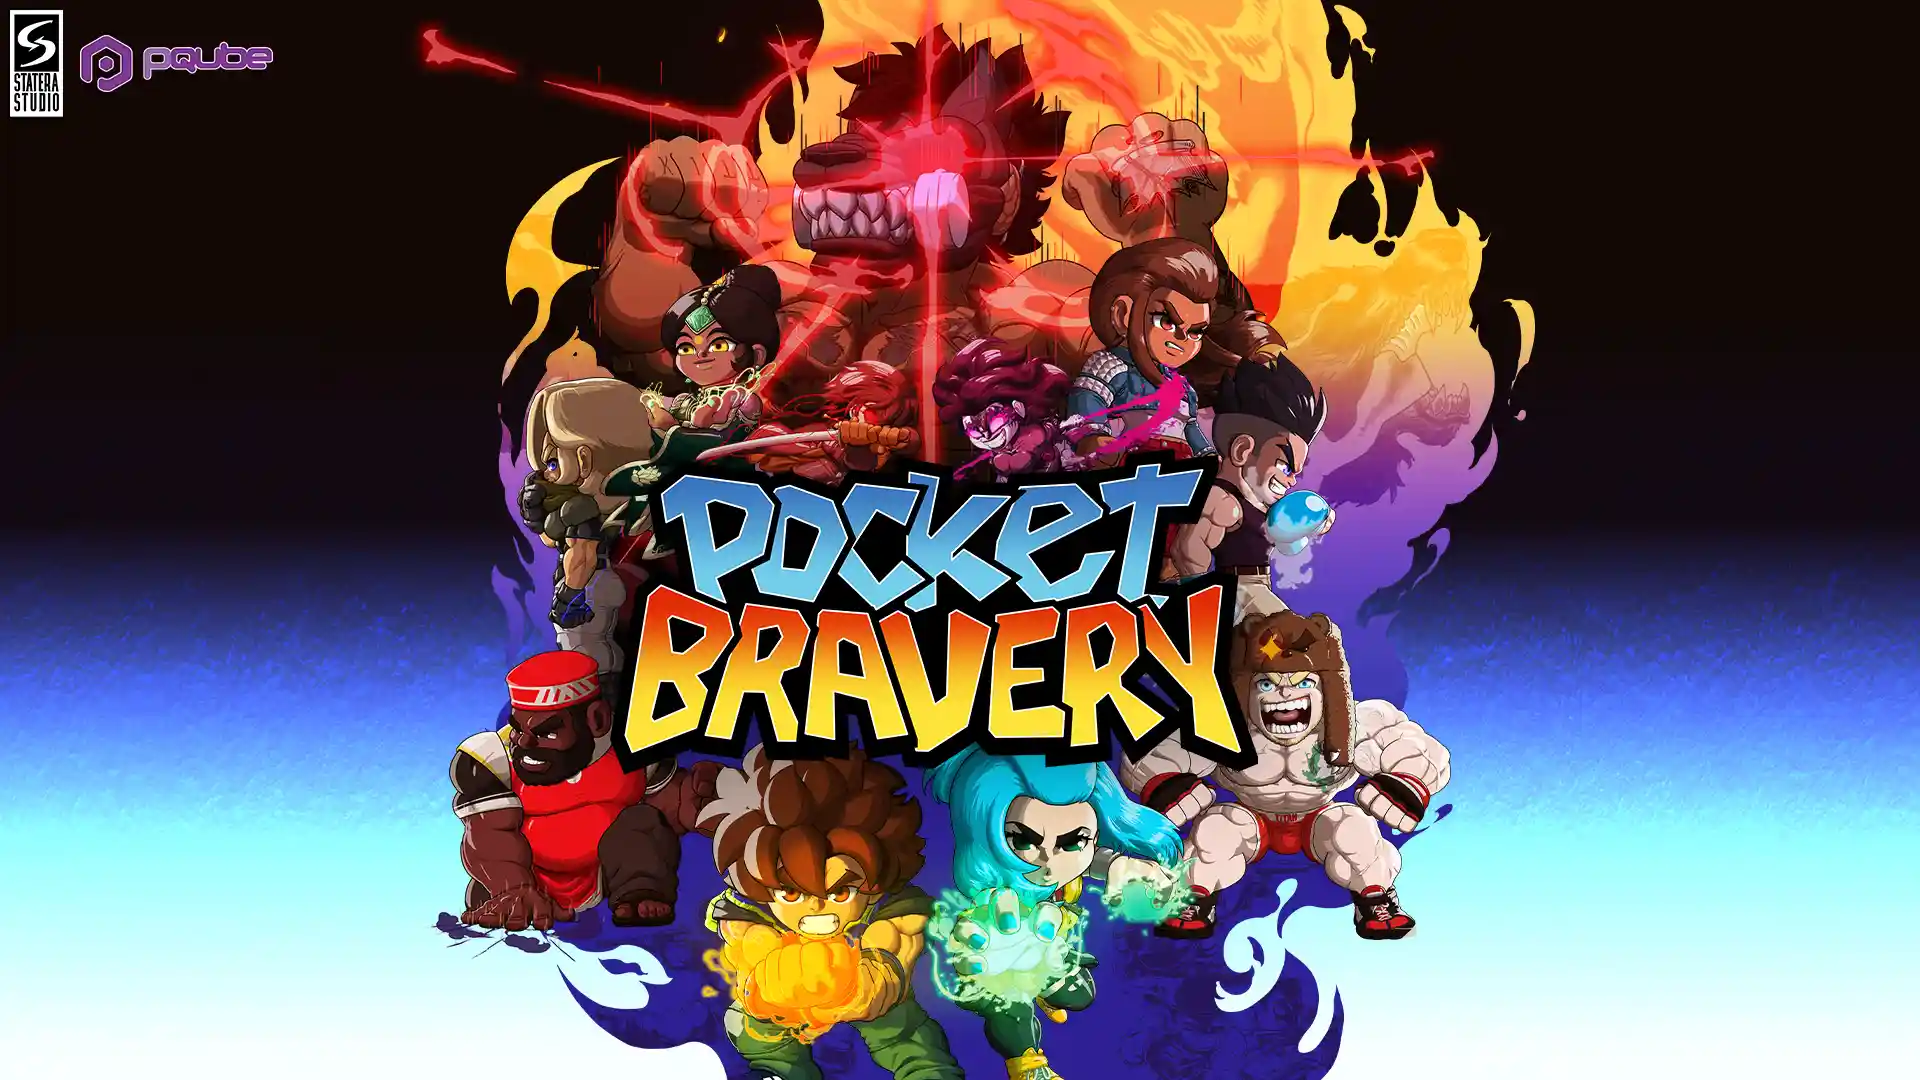 Pocket Bravery arribarà en format físic a Nintendo Switch i PlayStation